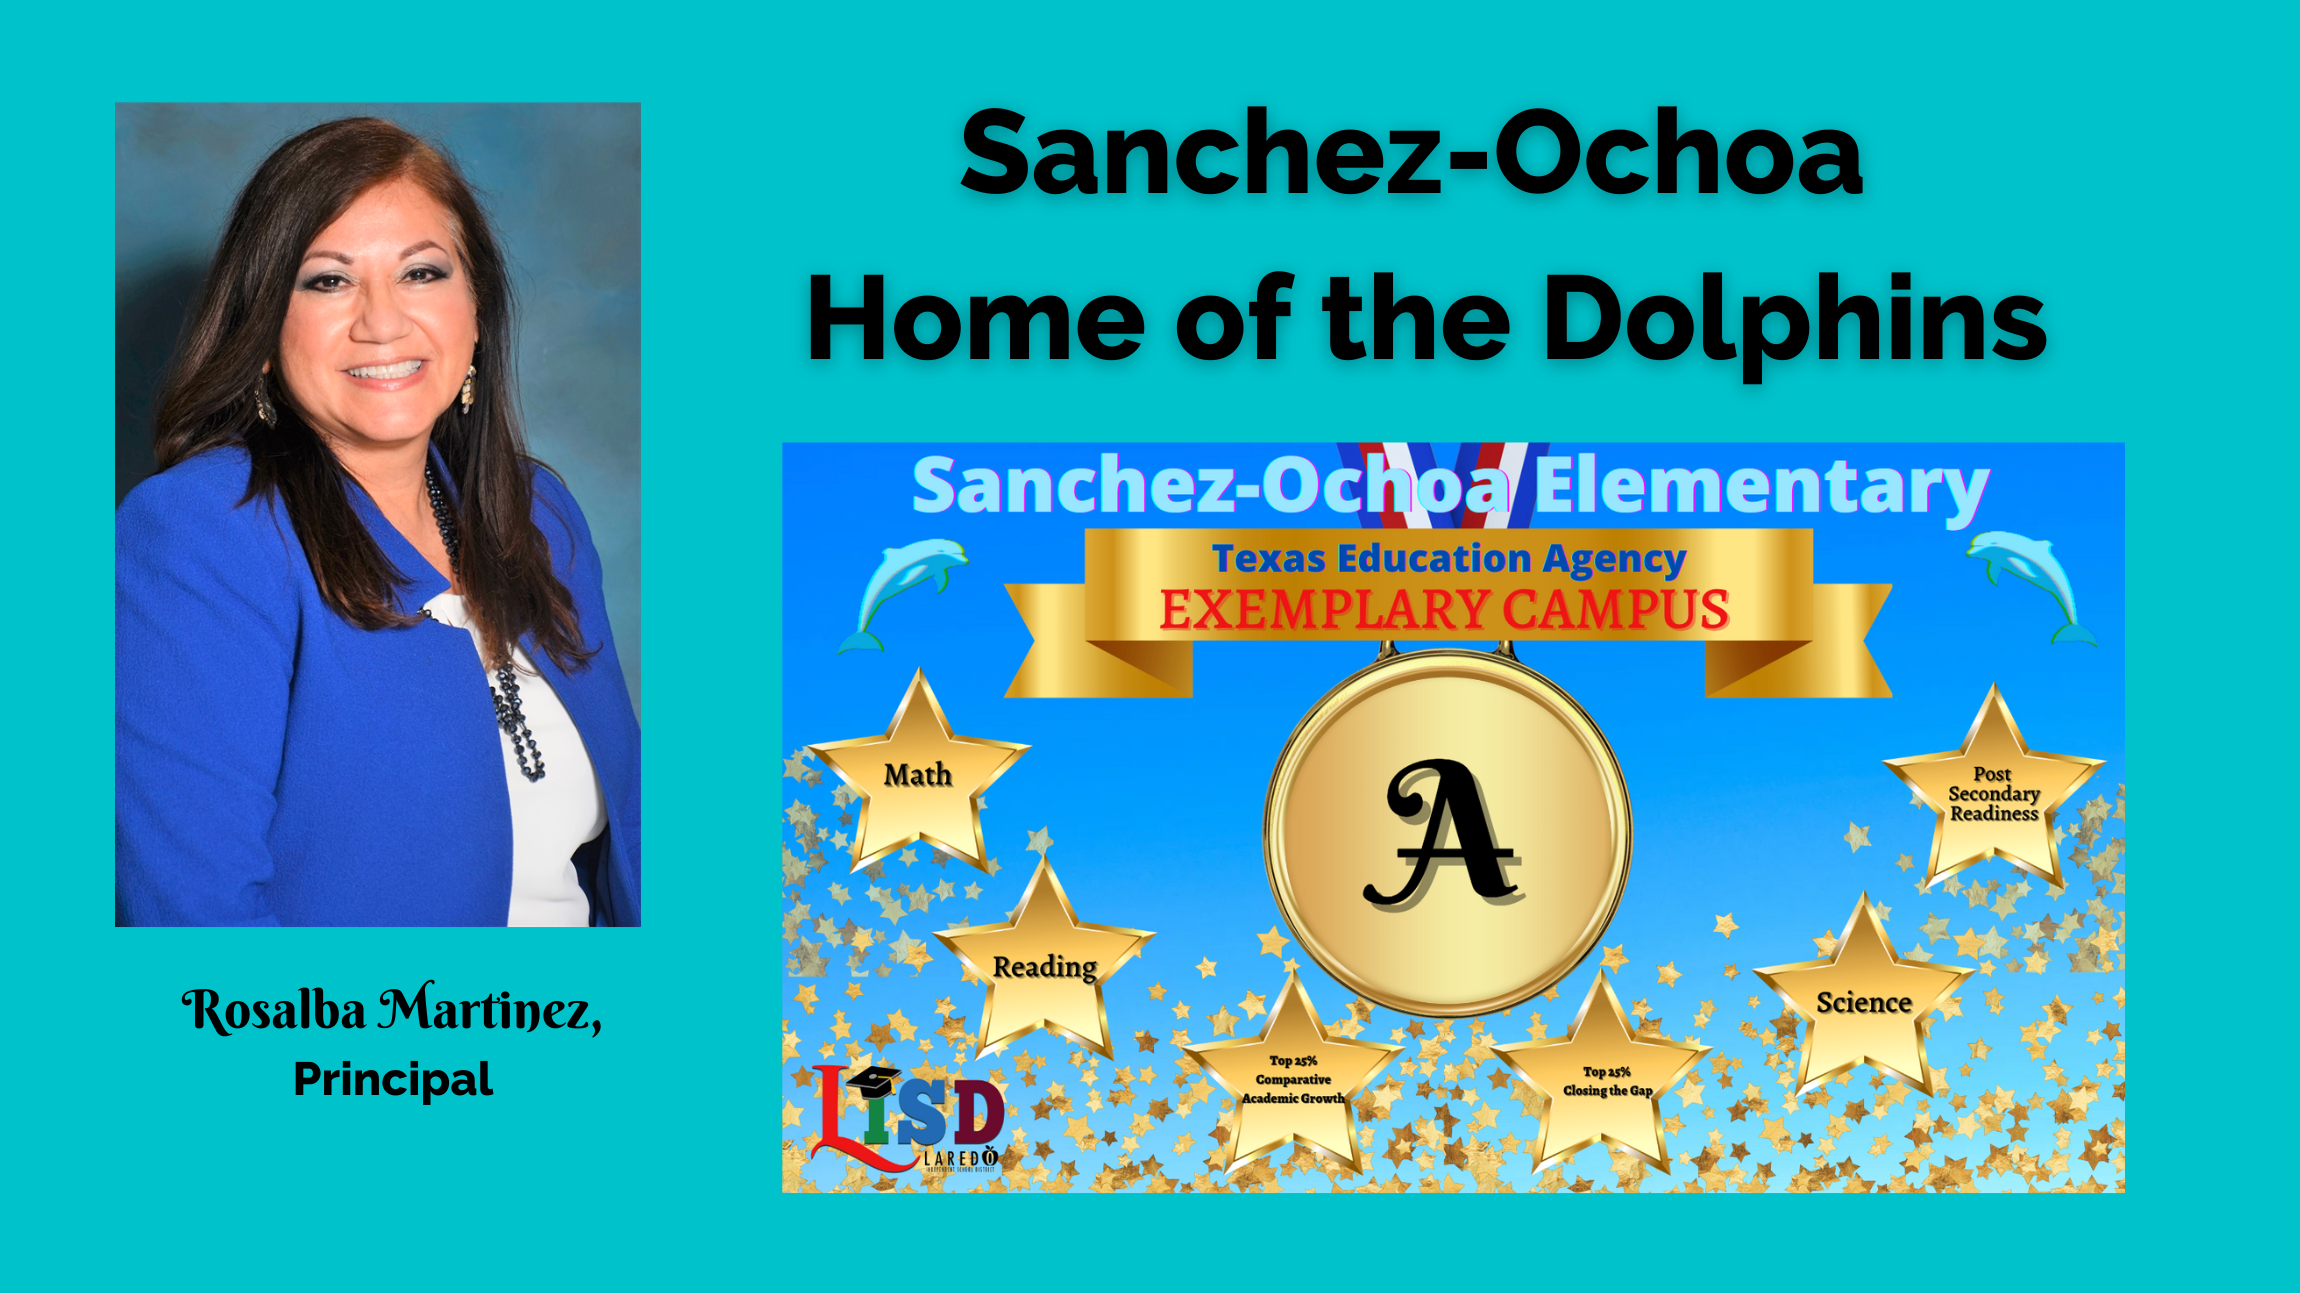 Welcome to Sanchez-Ochoa